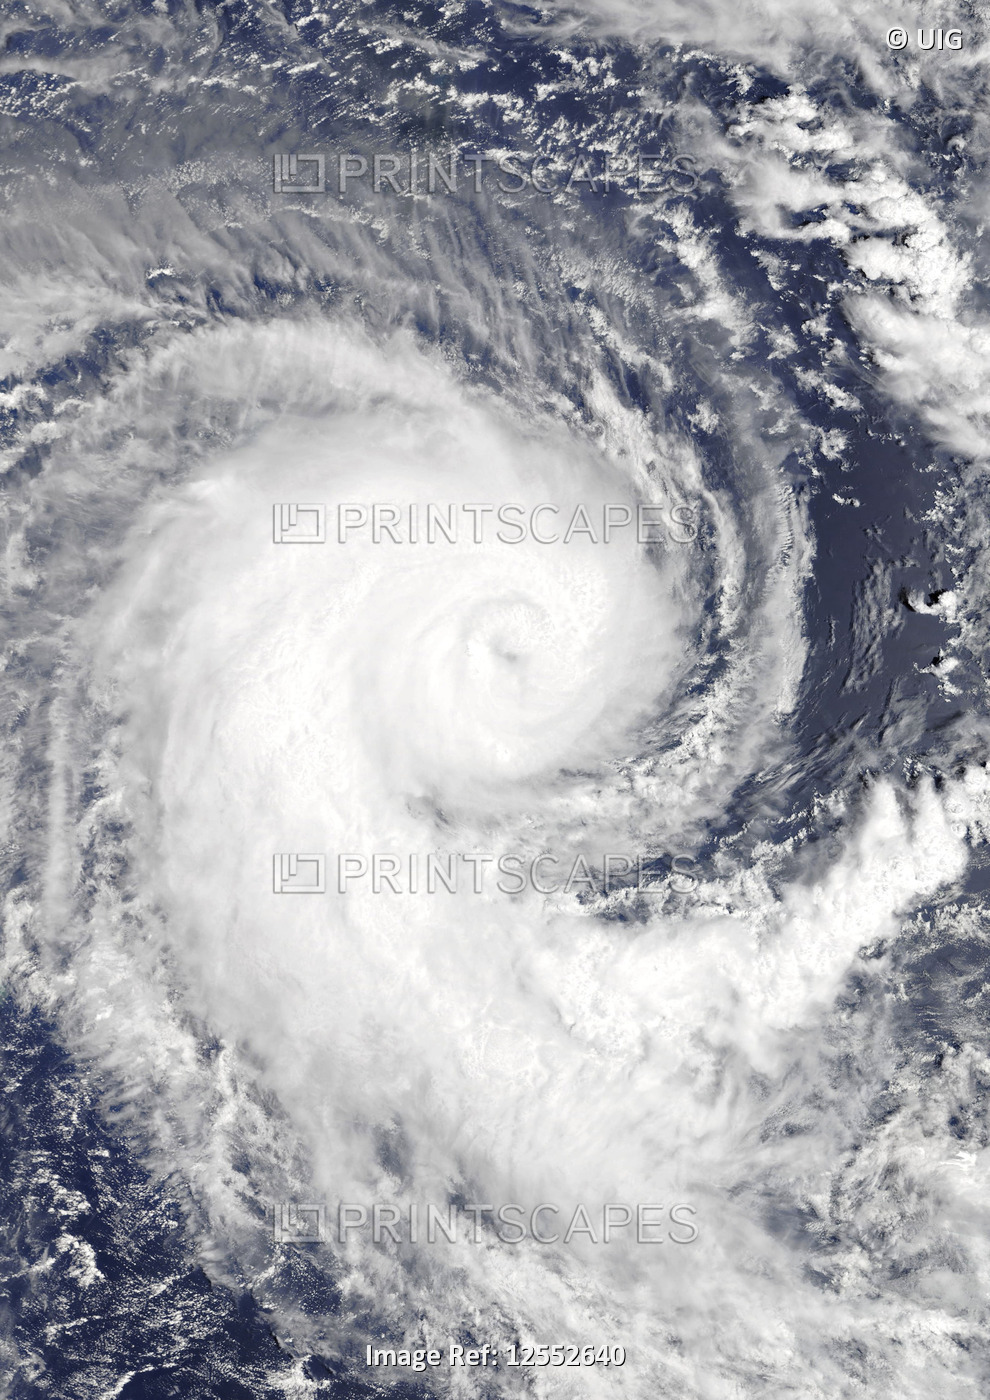 Satellite image of Tropical Cyclone Berguitta over Indian Ocean in 2018